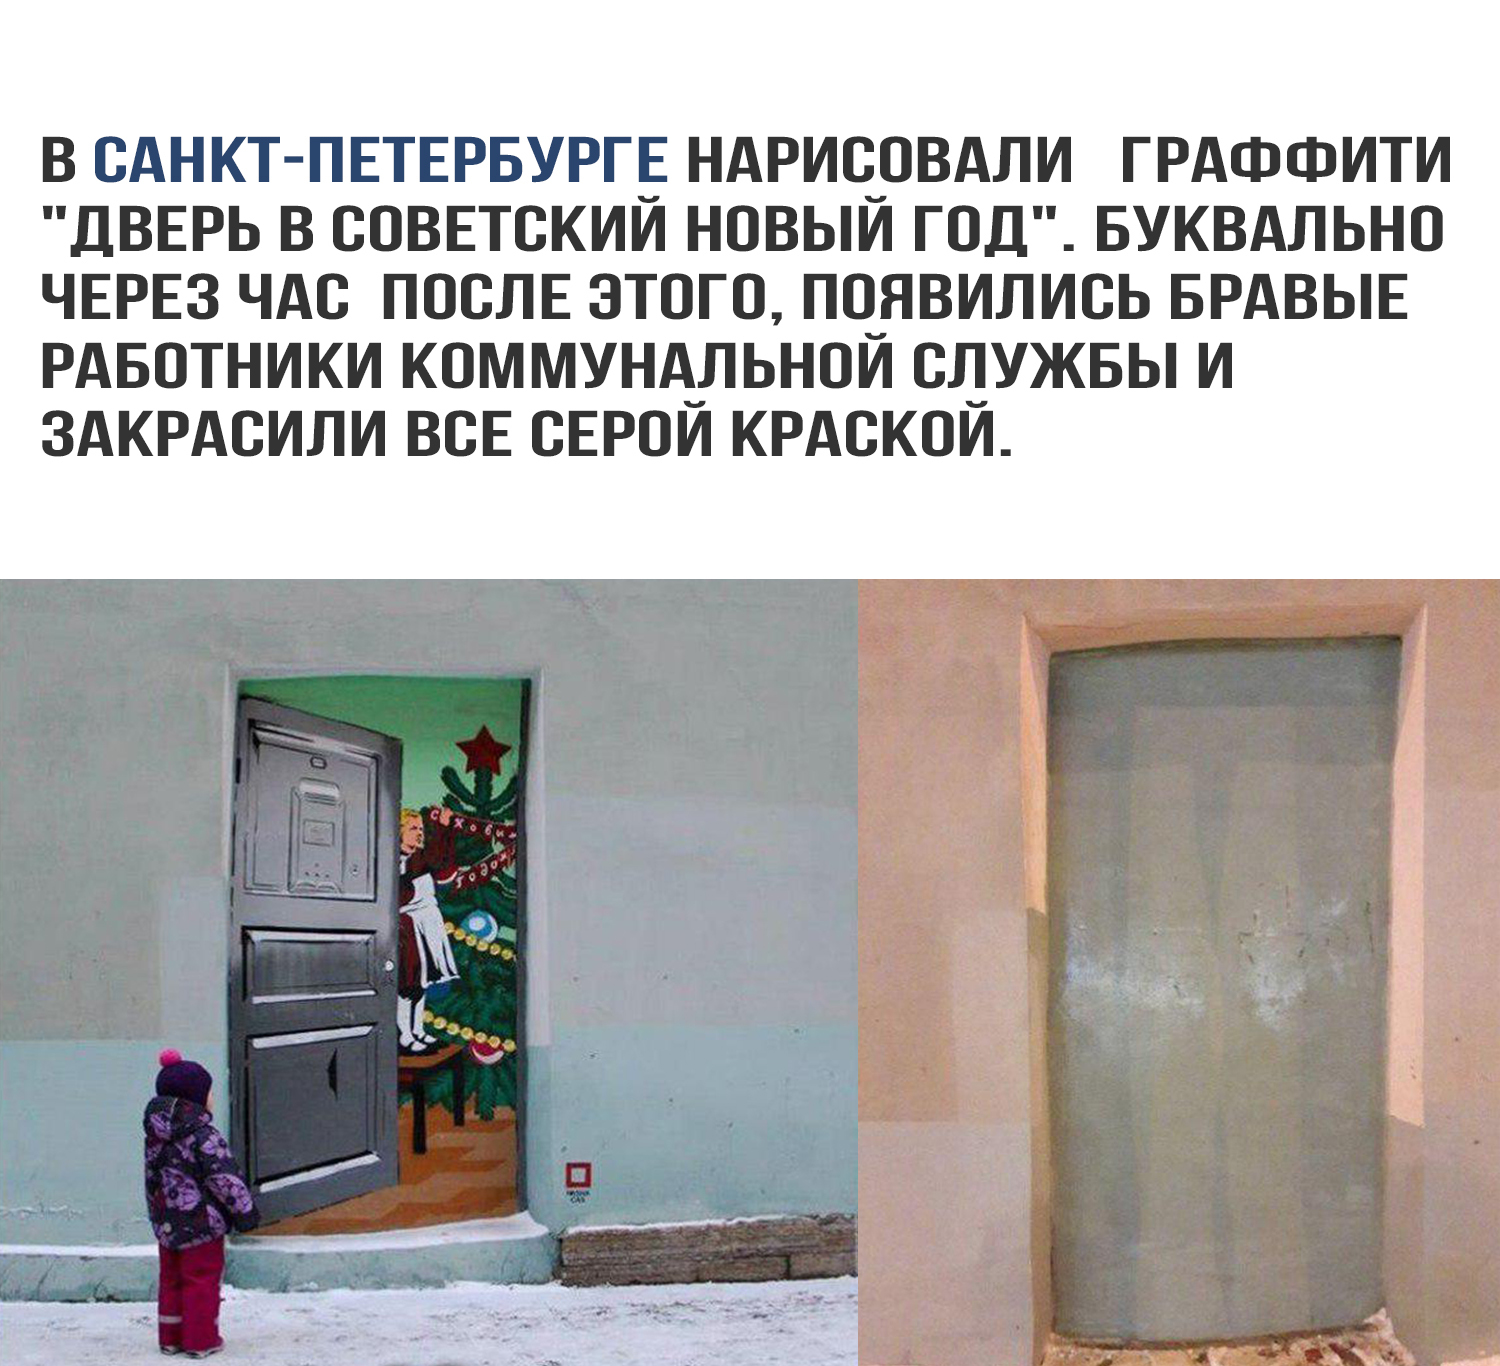 Russia for the sad - Saint Petersburg, Graffiti, Utility services